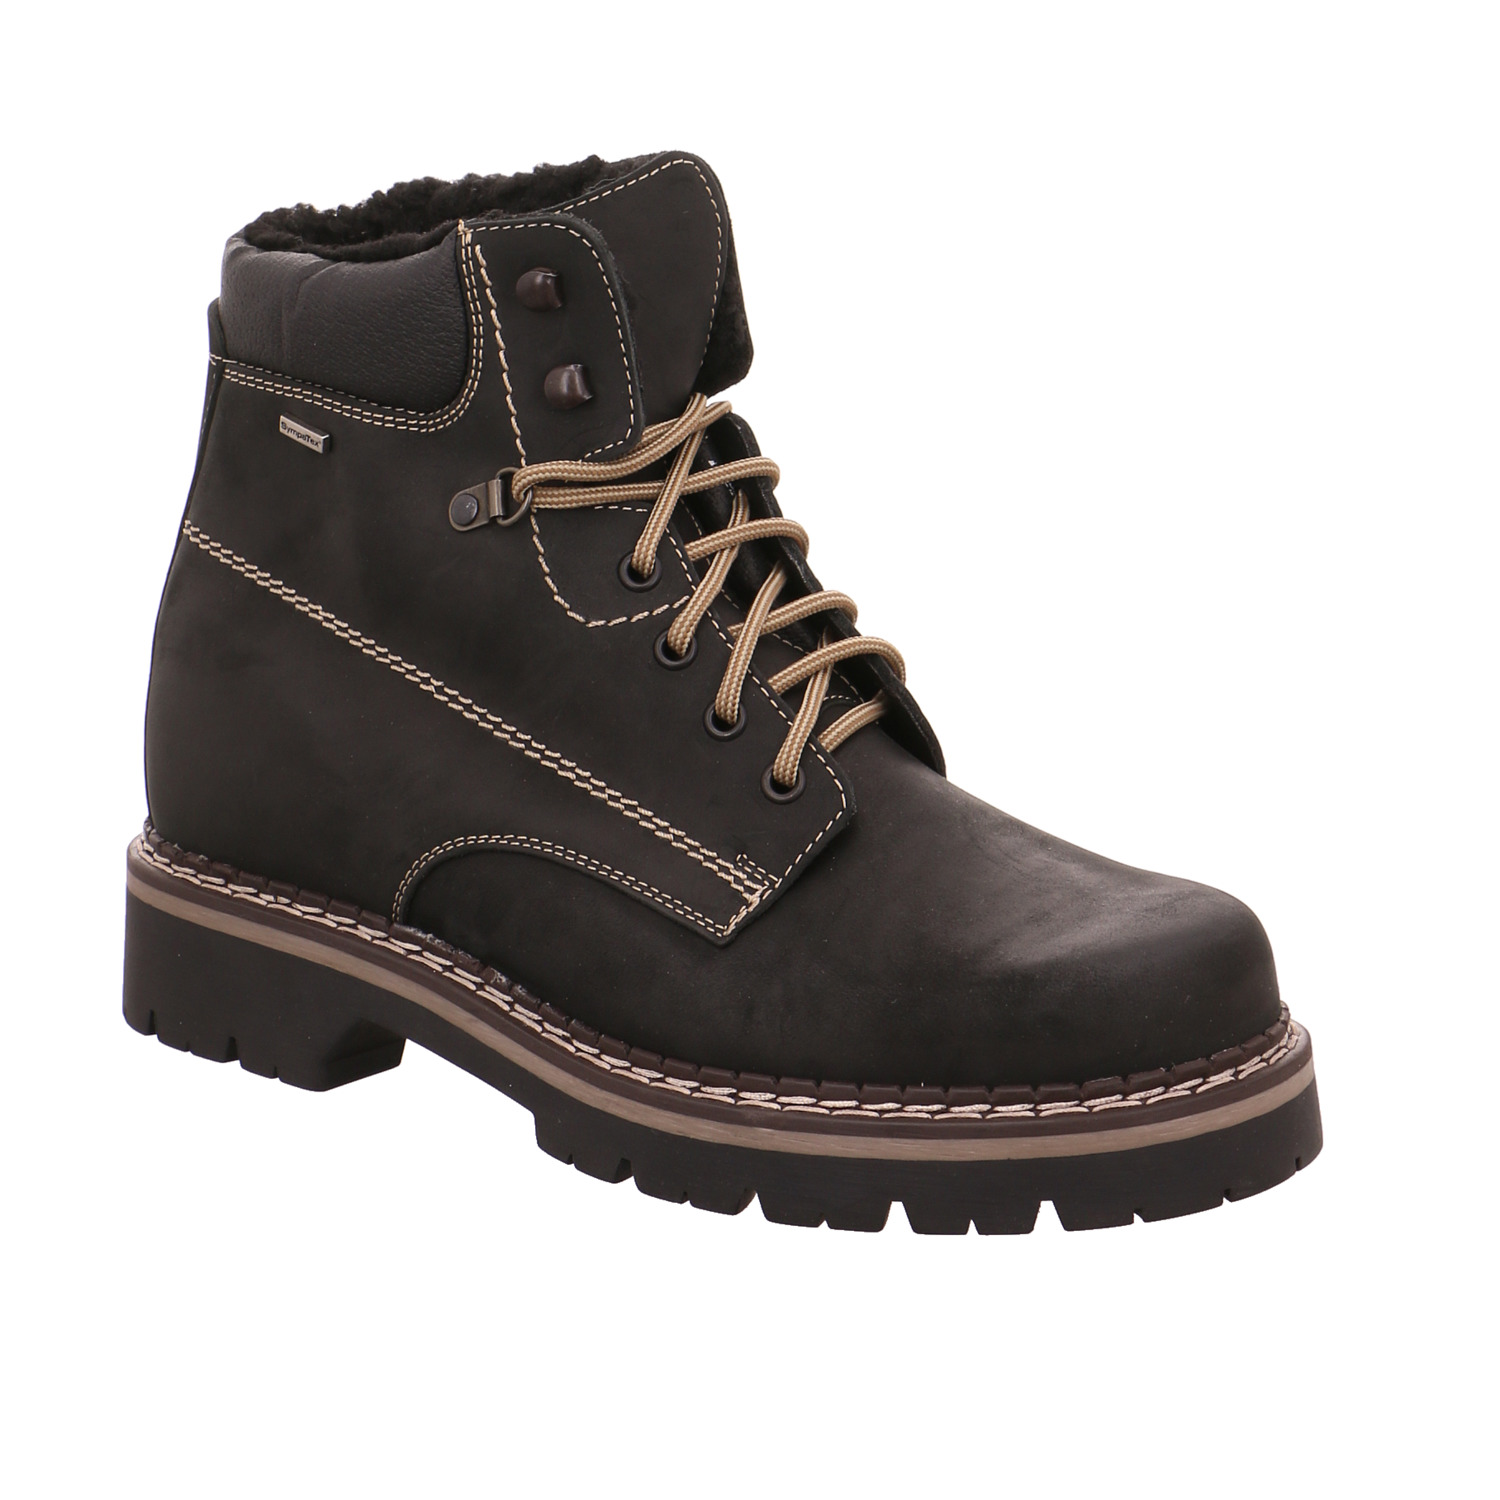 CORAMI Winter-Boots Schwarz Leder